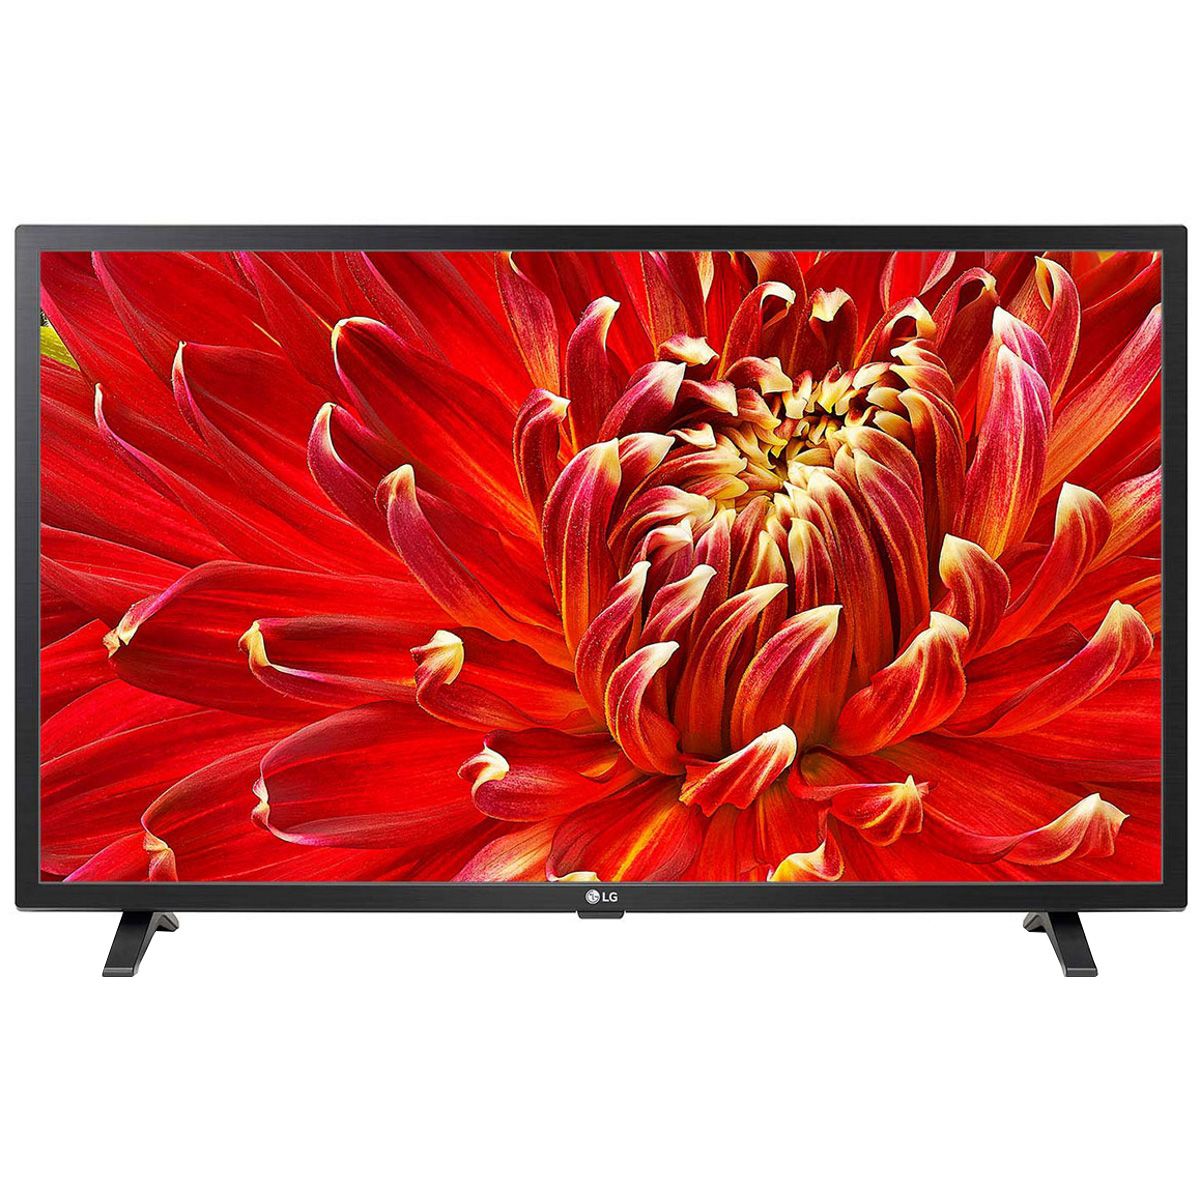 Televizor LED LG 32LM6300PLA, 80 cm, Smart TV, Full HD, Smart ThinQ, Procesor Quad Core, Bluetooth 5.0, Wi-Fi, Sunet stereo, Negru